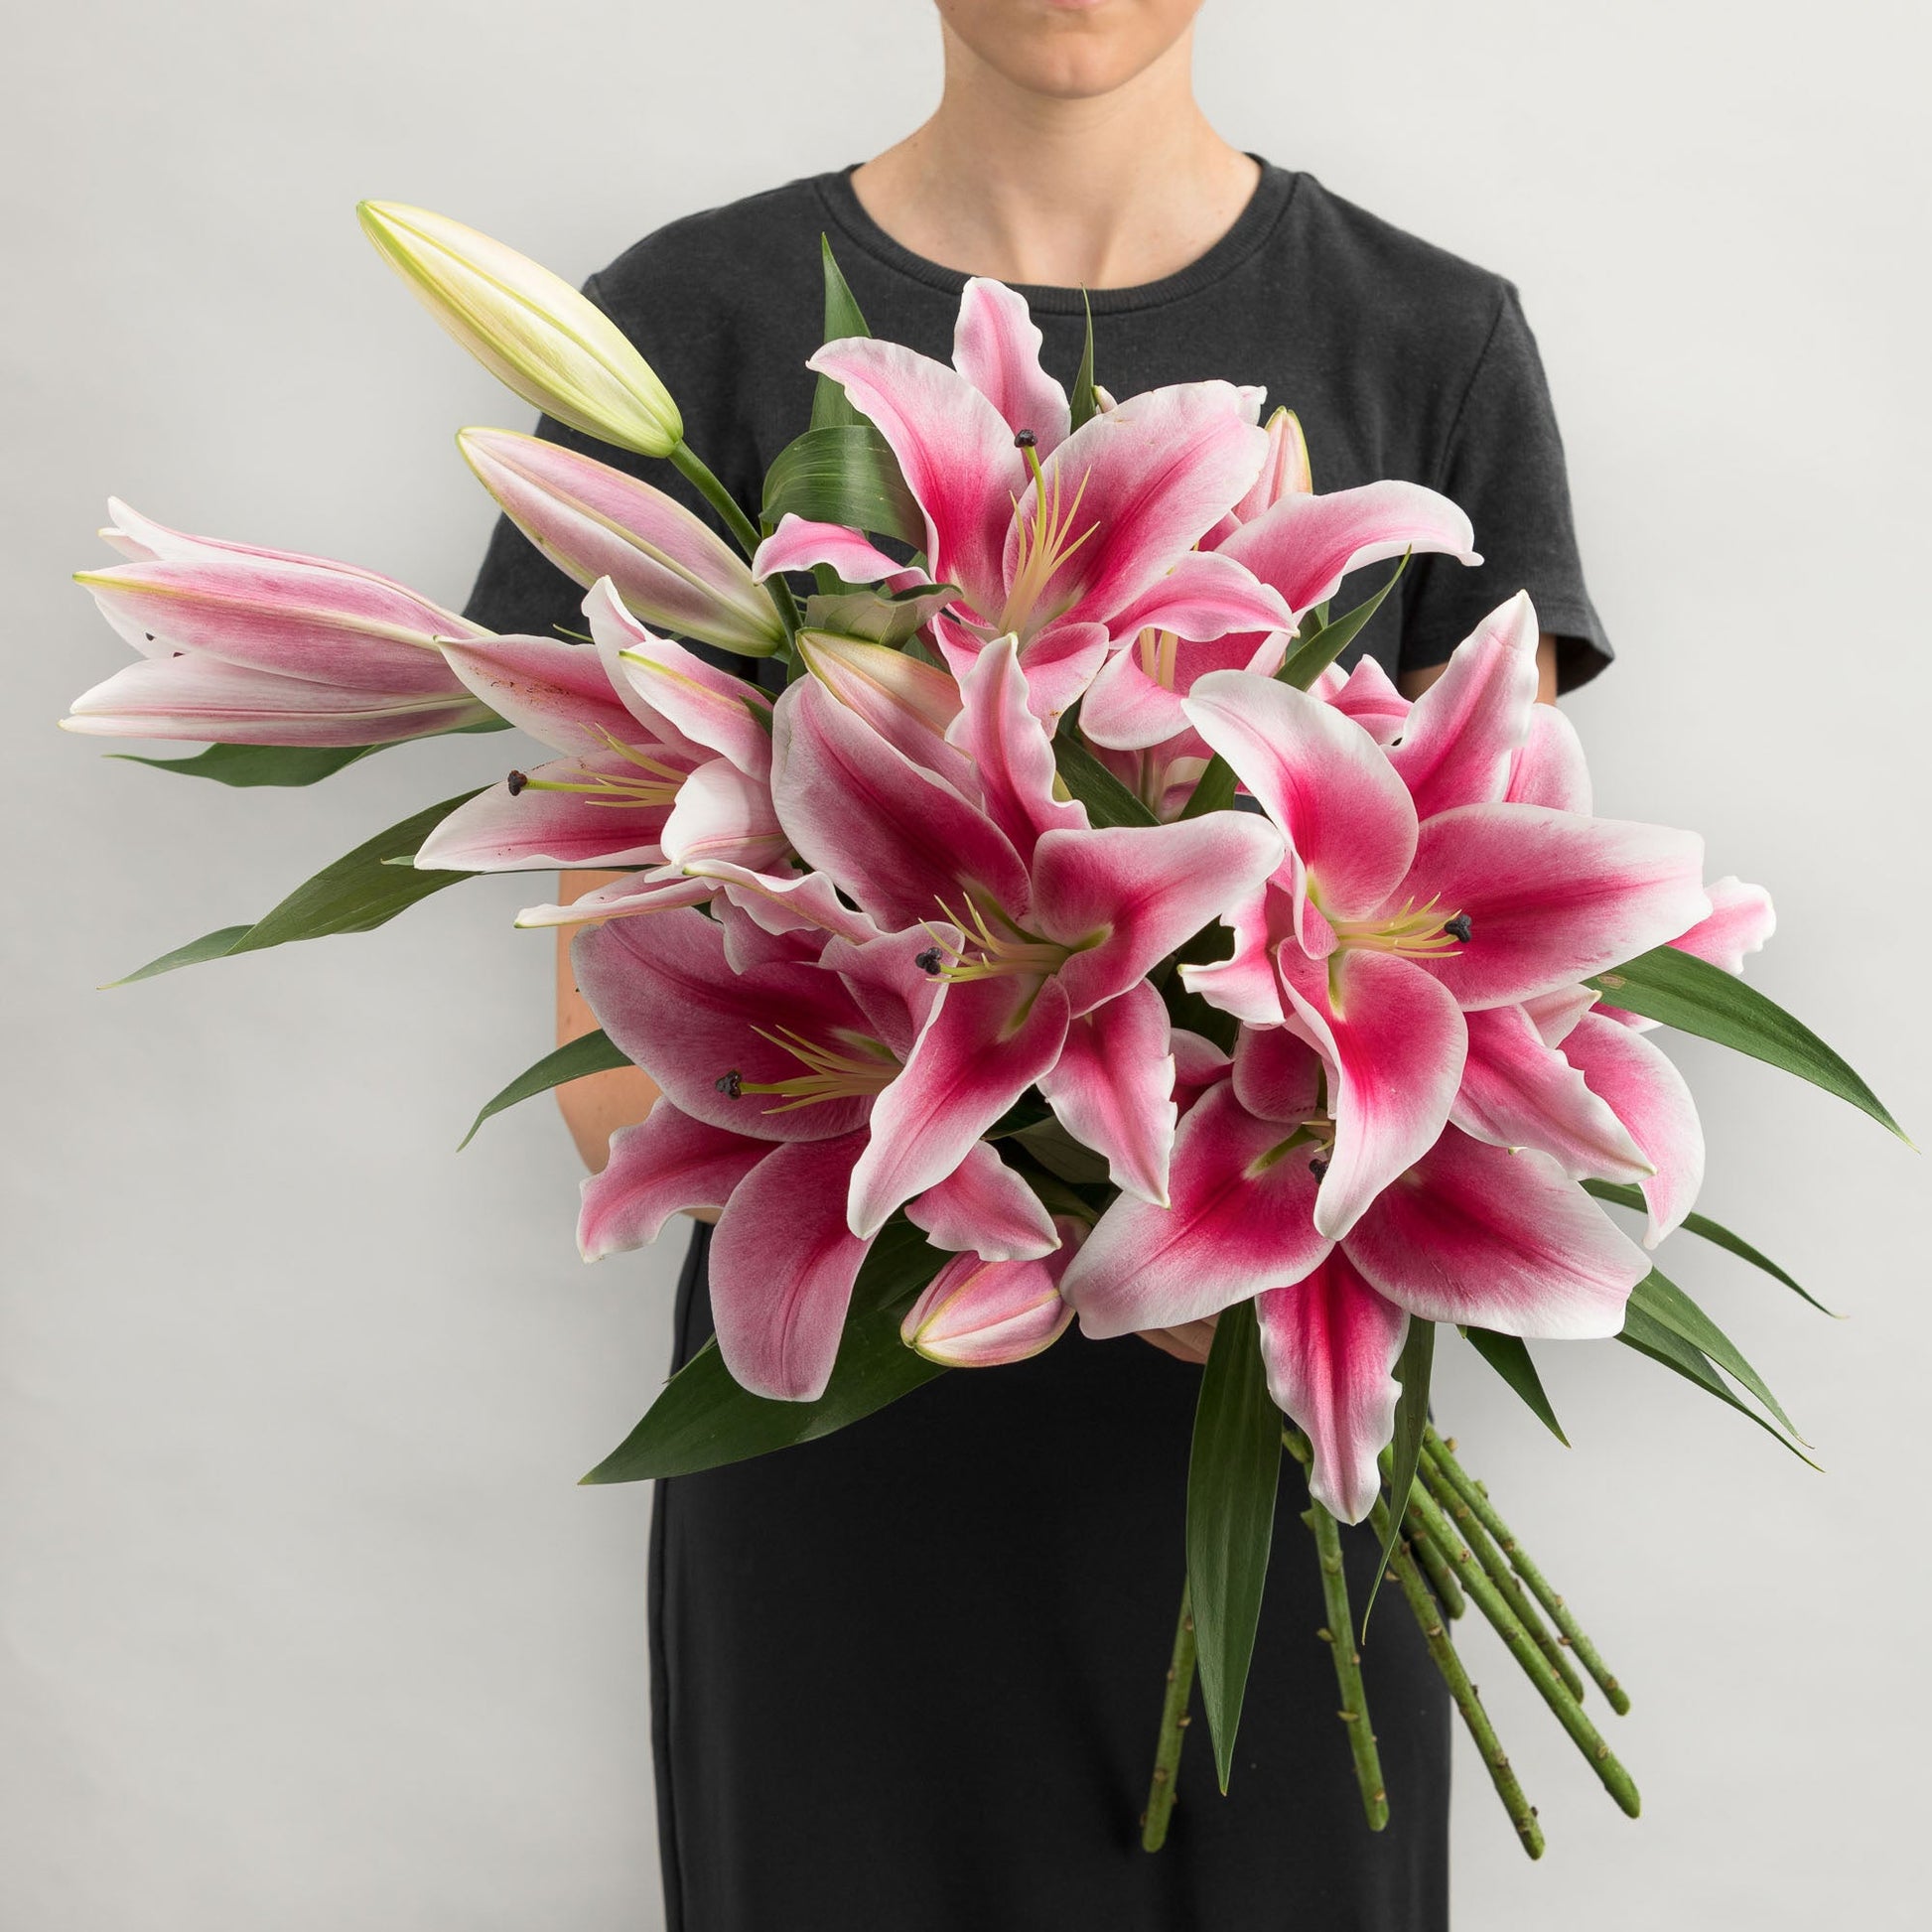 Woman wearing a black dress, holding a bouquet of pink oriental lilies.